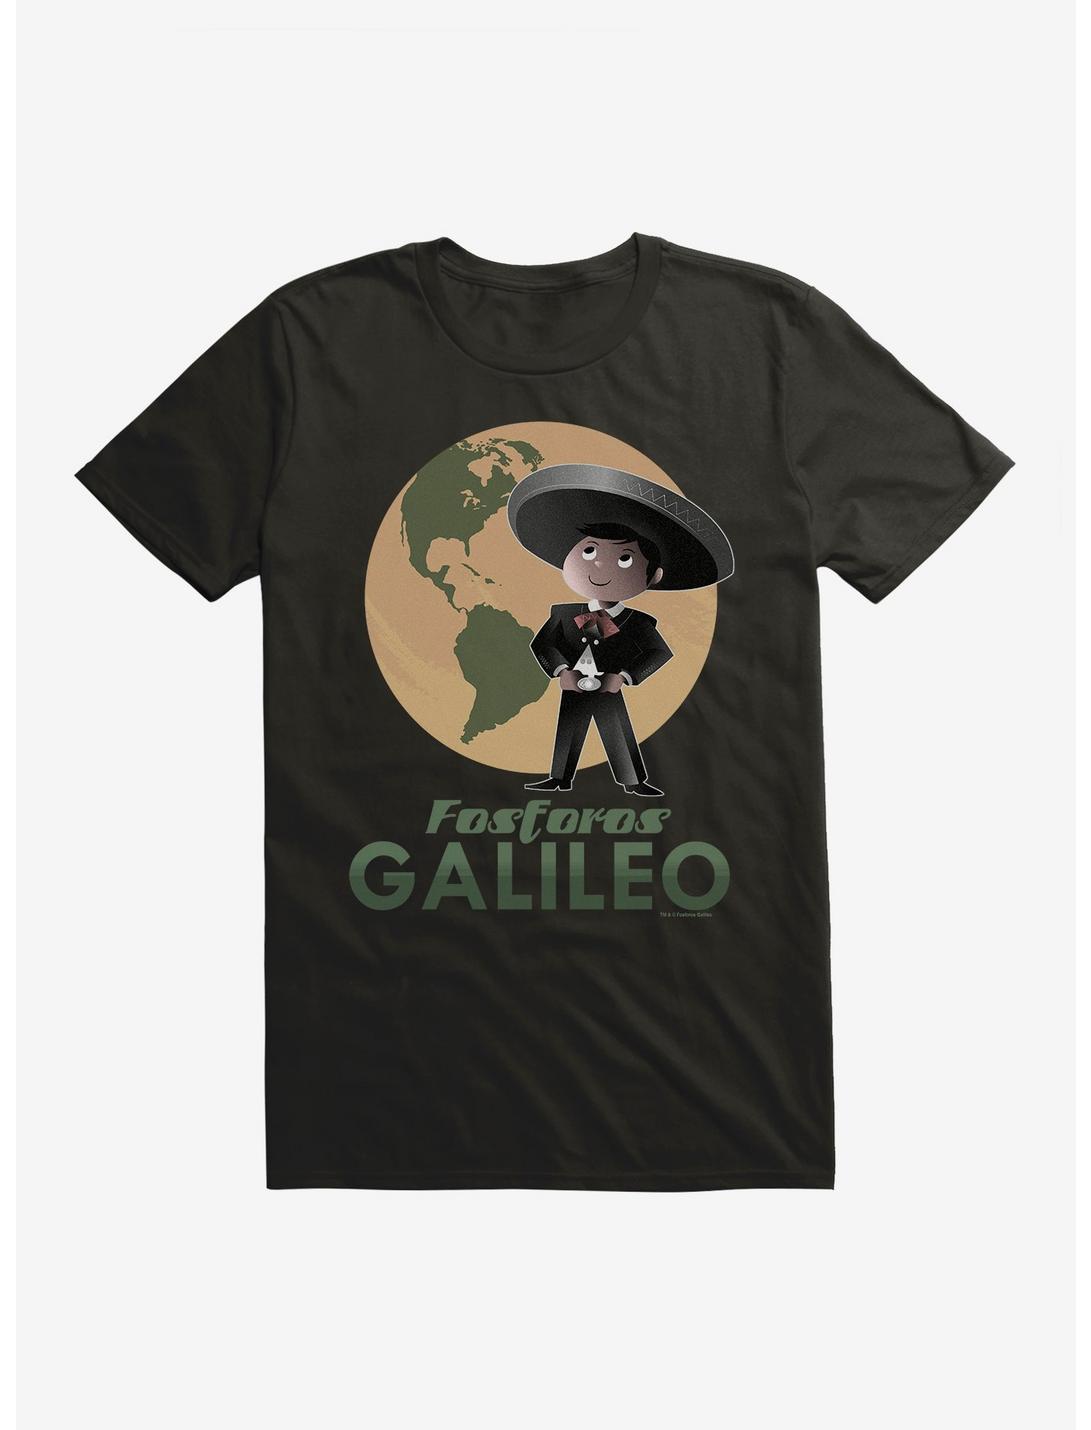 Fosforos Galileo Charro Boy T-Shirt, , hi-res